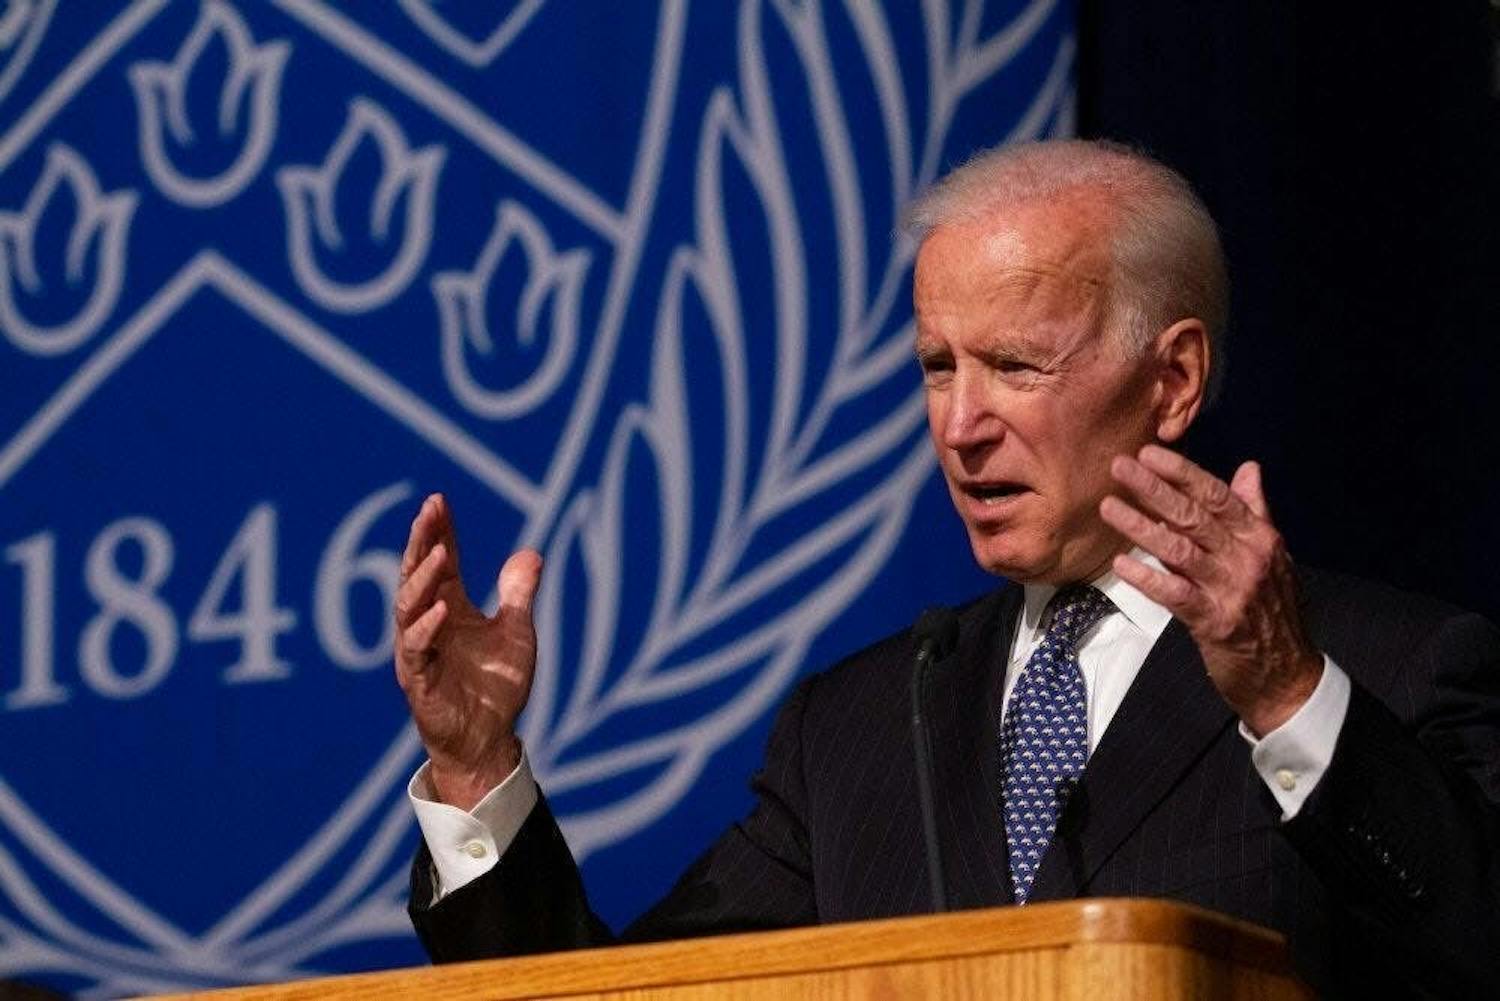 2020 presidential candidate Joe Biden at the distinguished speakers series in 2018.